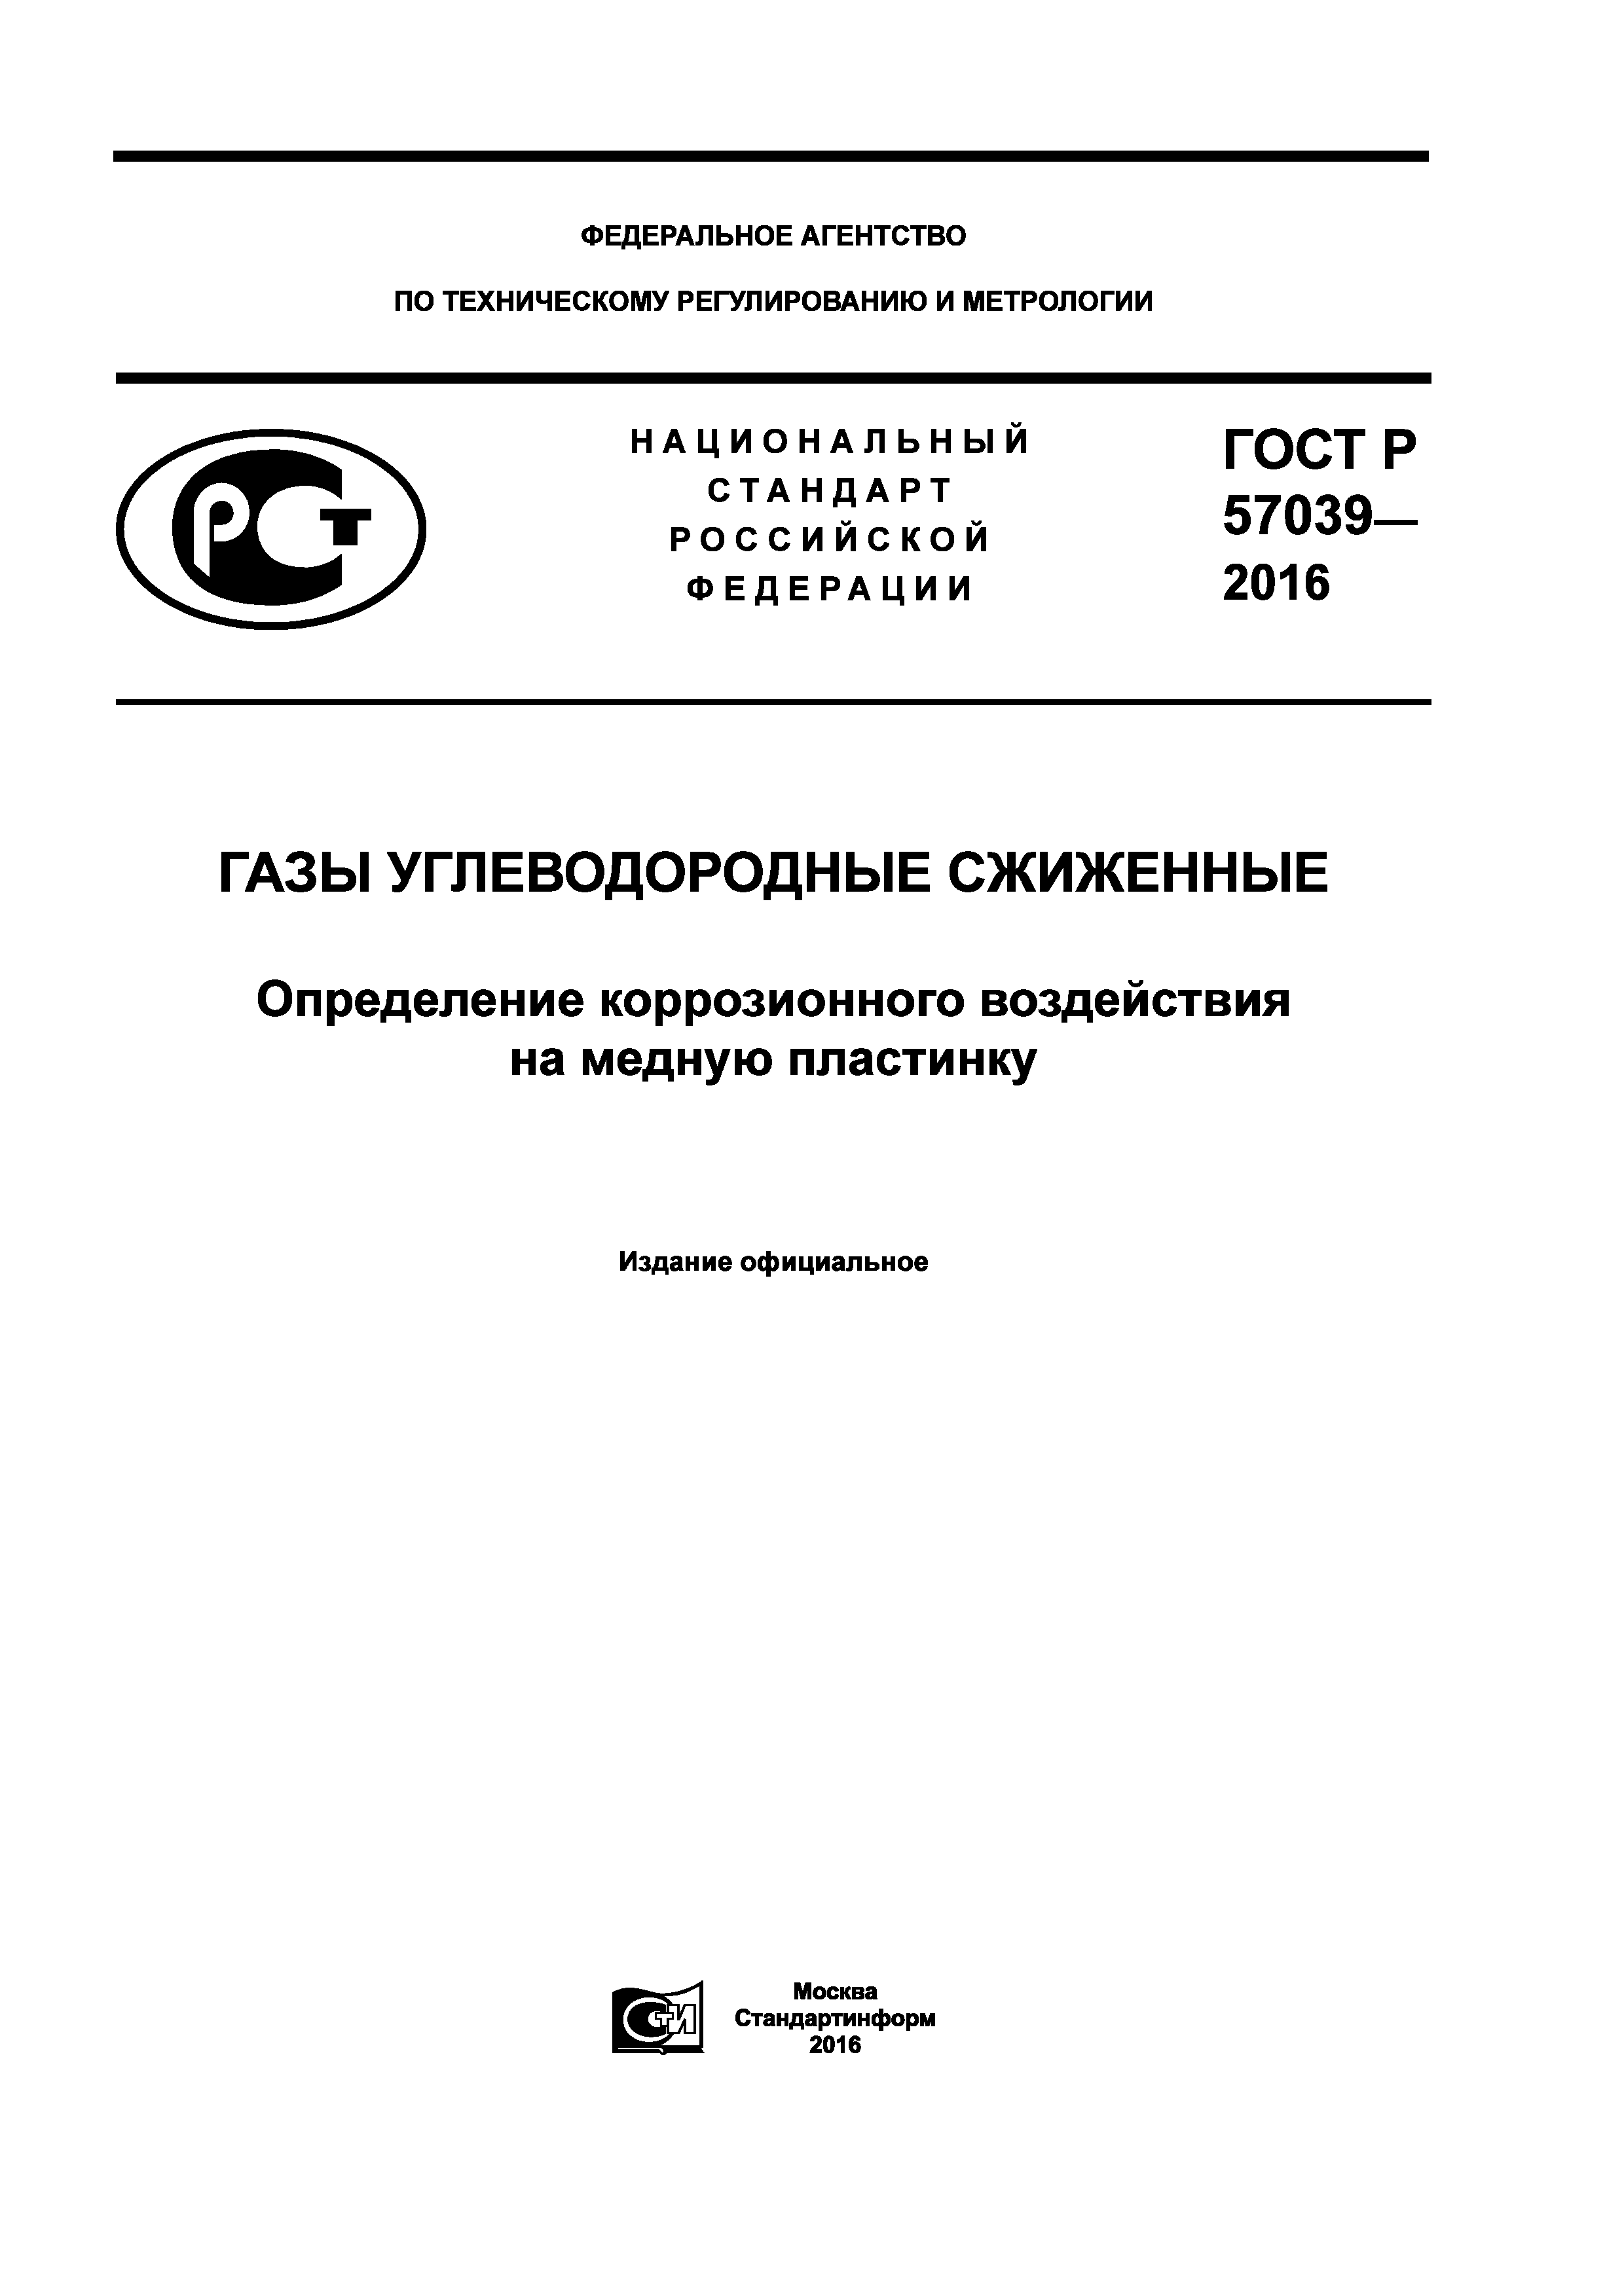 ГОСТ Р 57039-2016